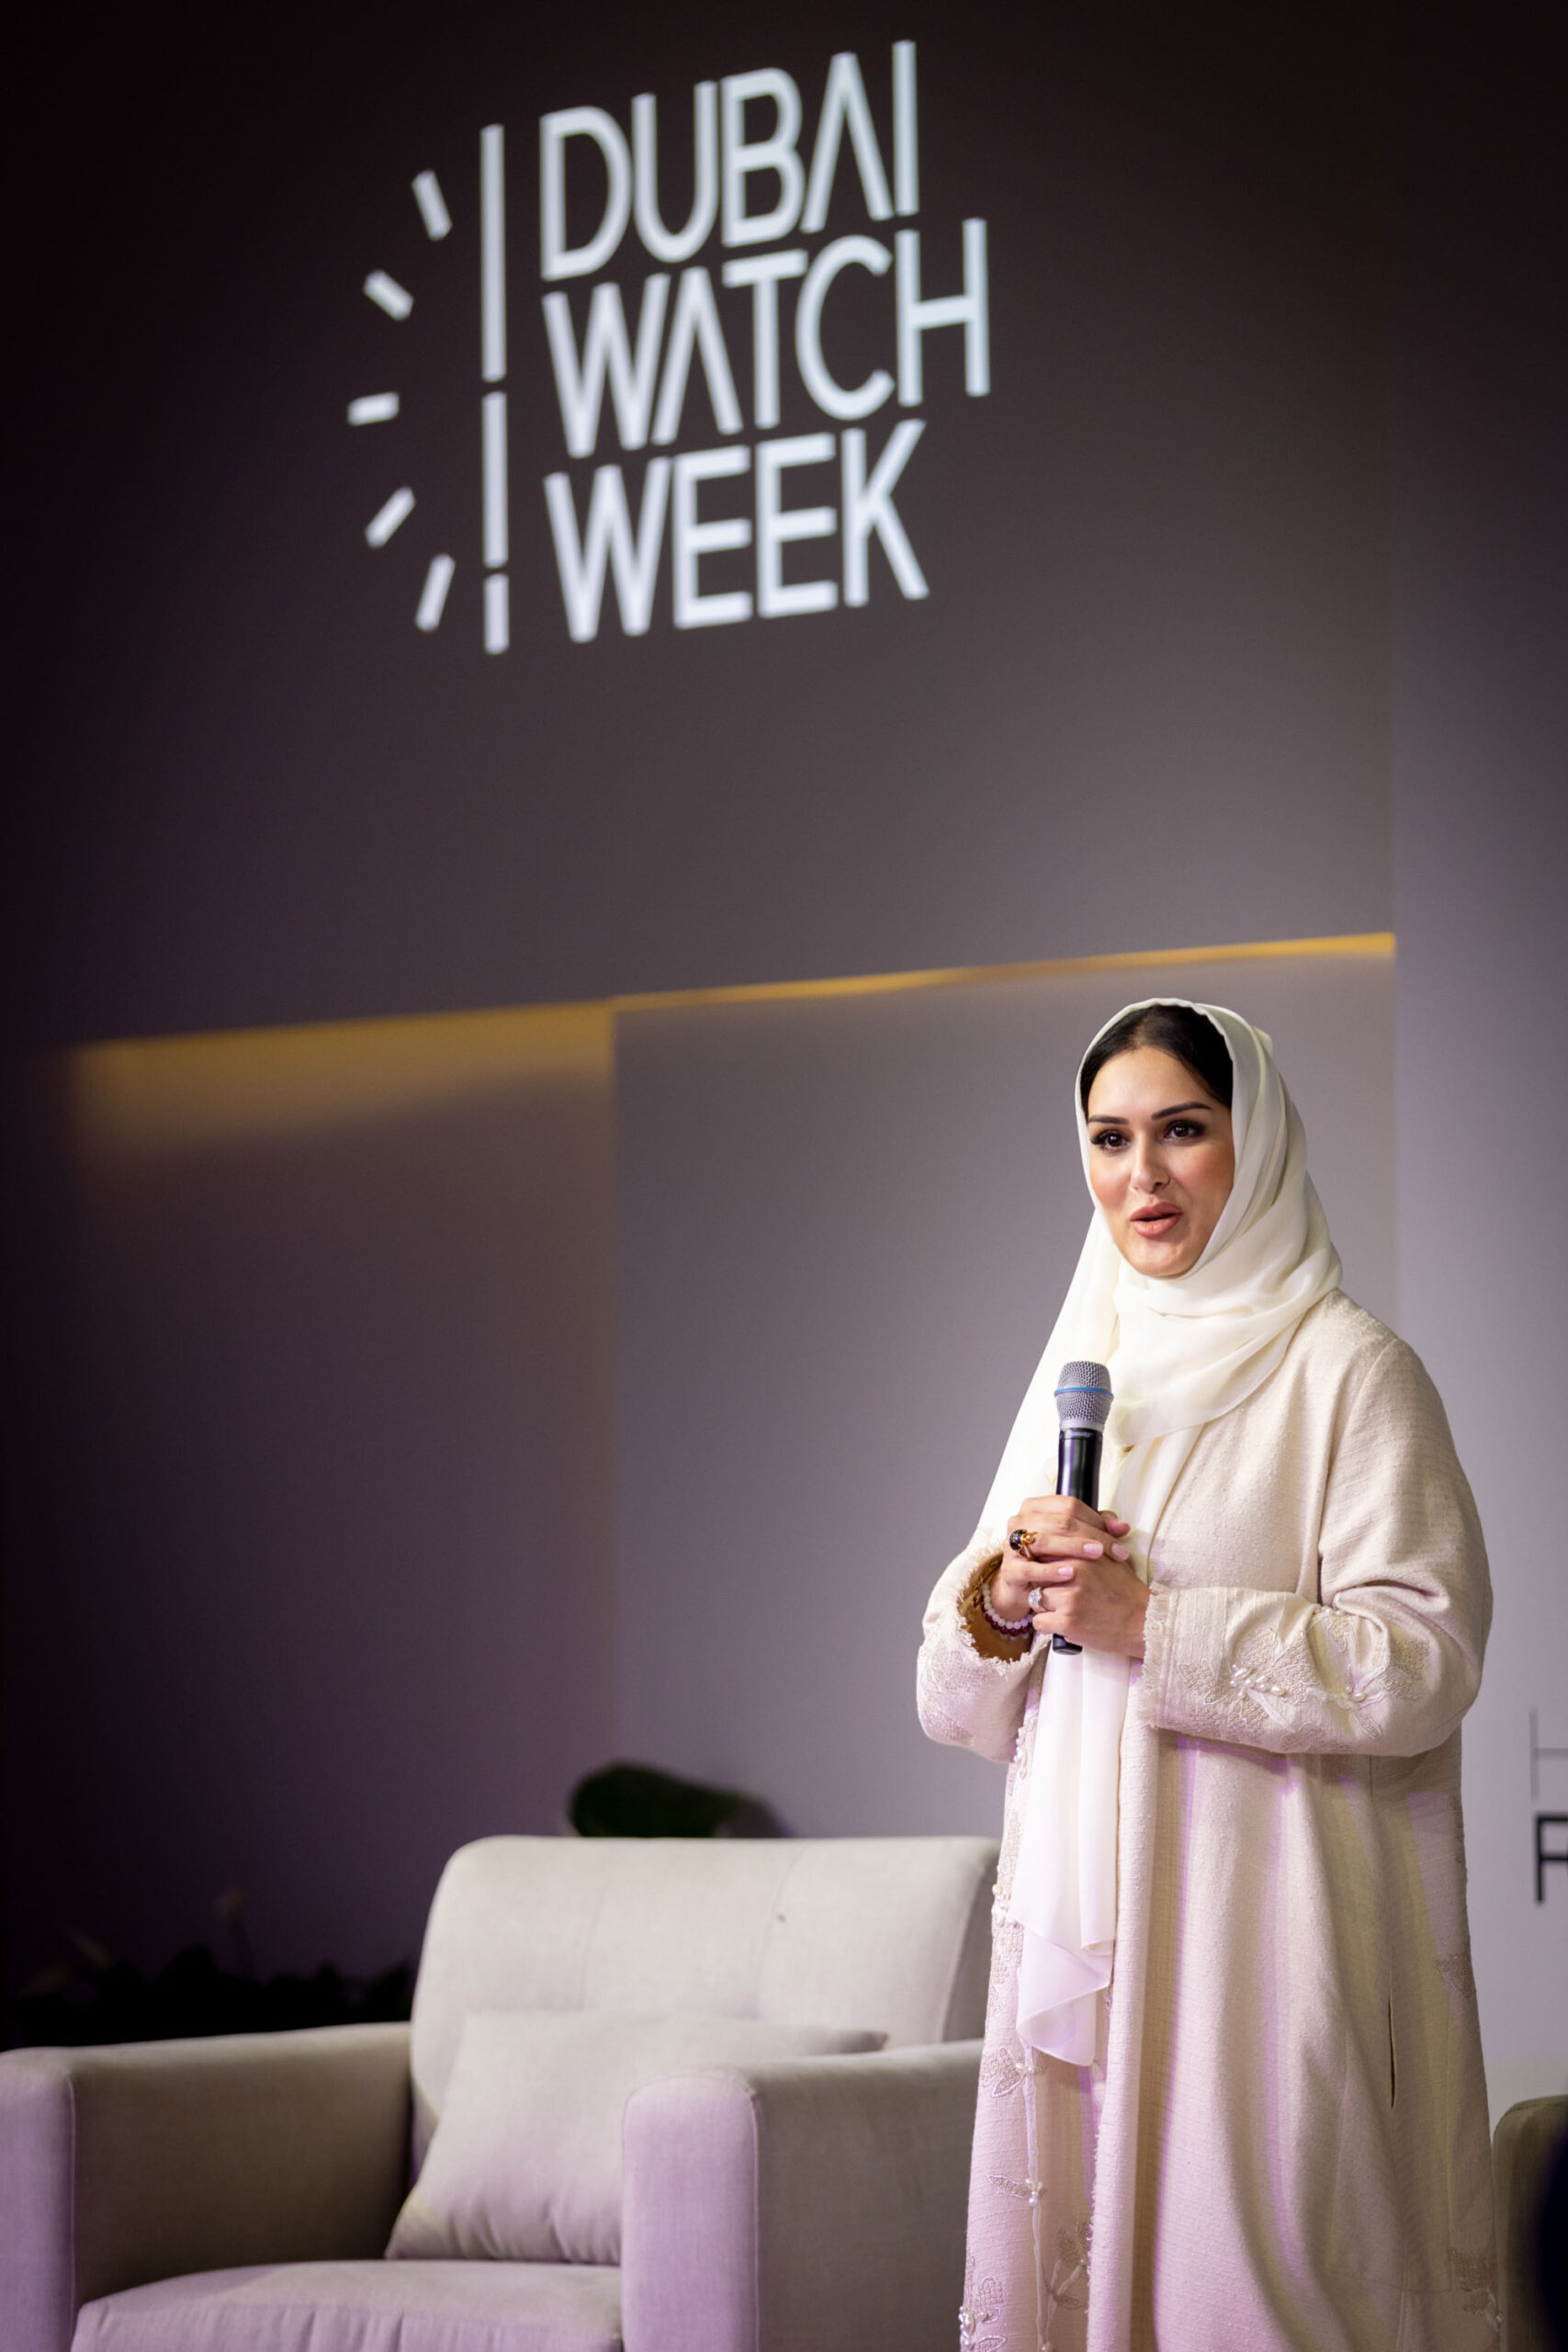 Events&Co » LVMH Watch Week (Dubai)